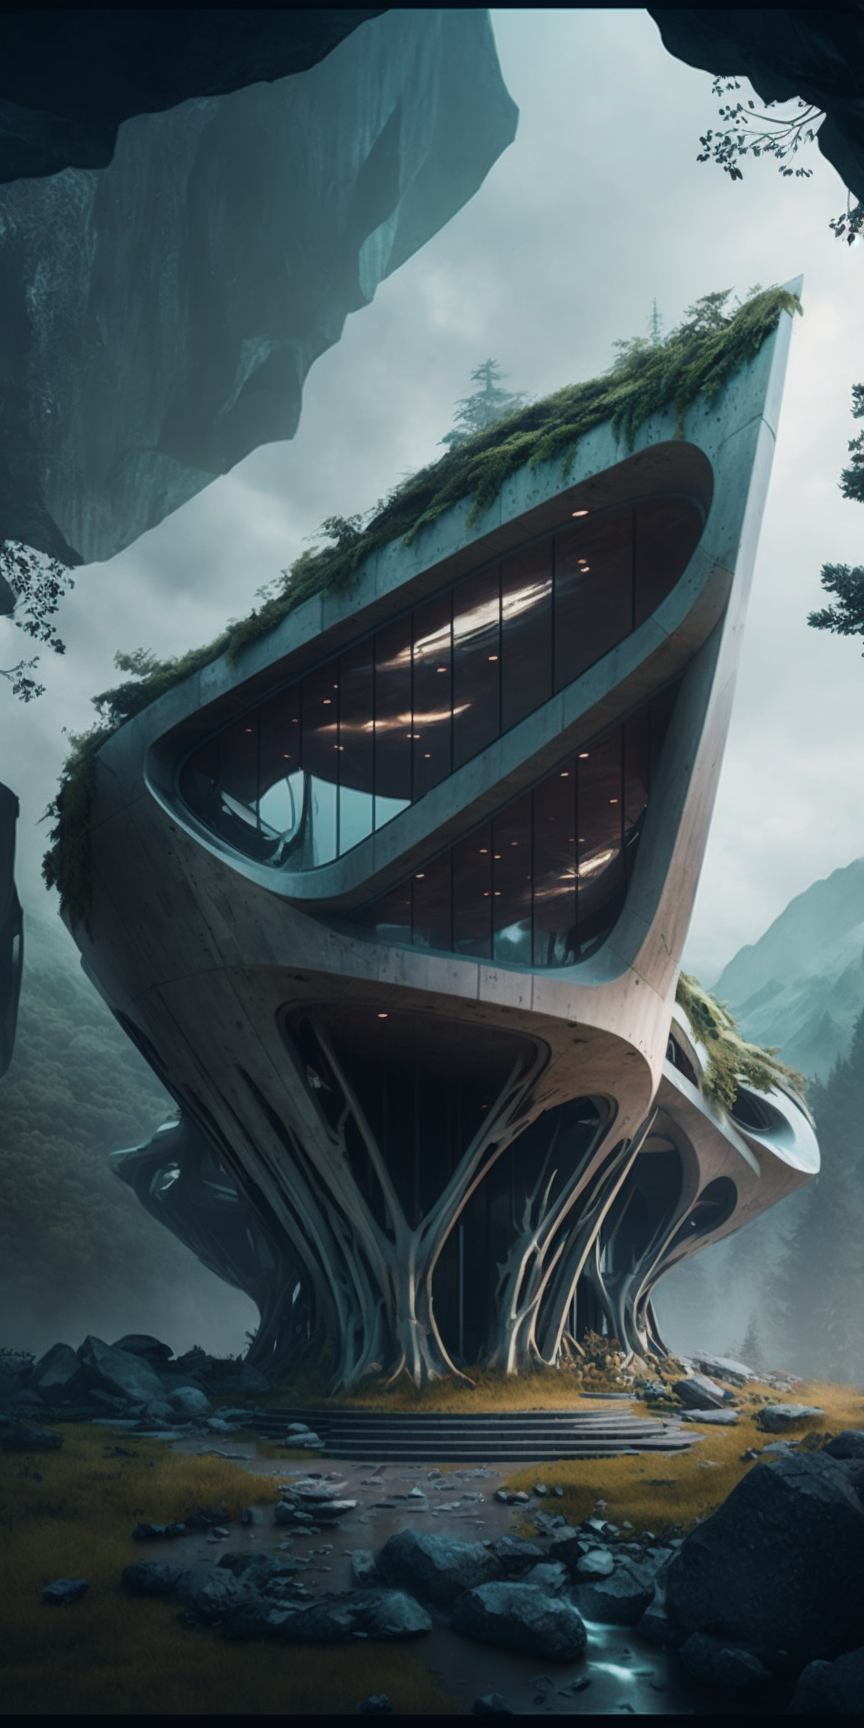 Alien Architecture Wallpaper: A Futuristic, Organic, and Mystical Landscape